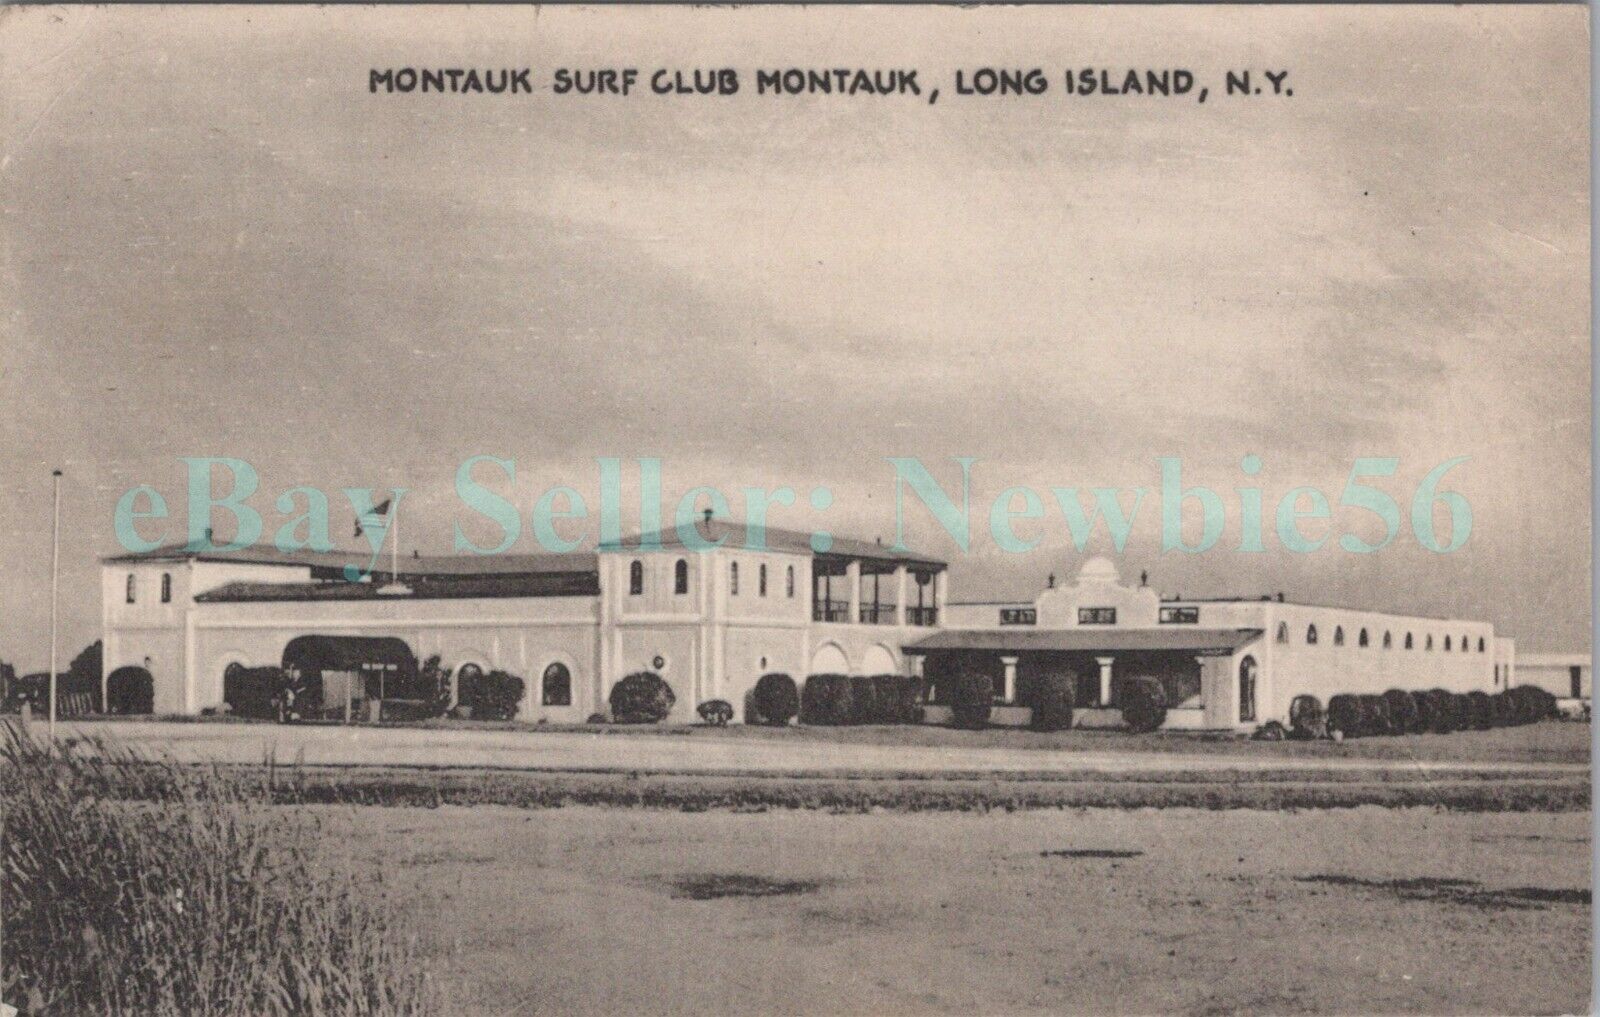 Montauk LI NY - MONTAUK SURF CLUB - c1940s Postcard